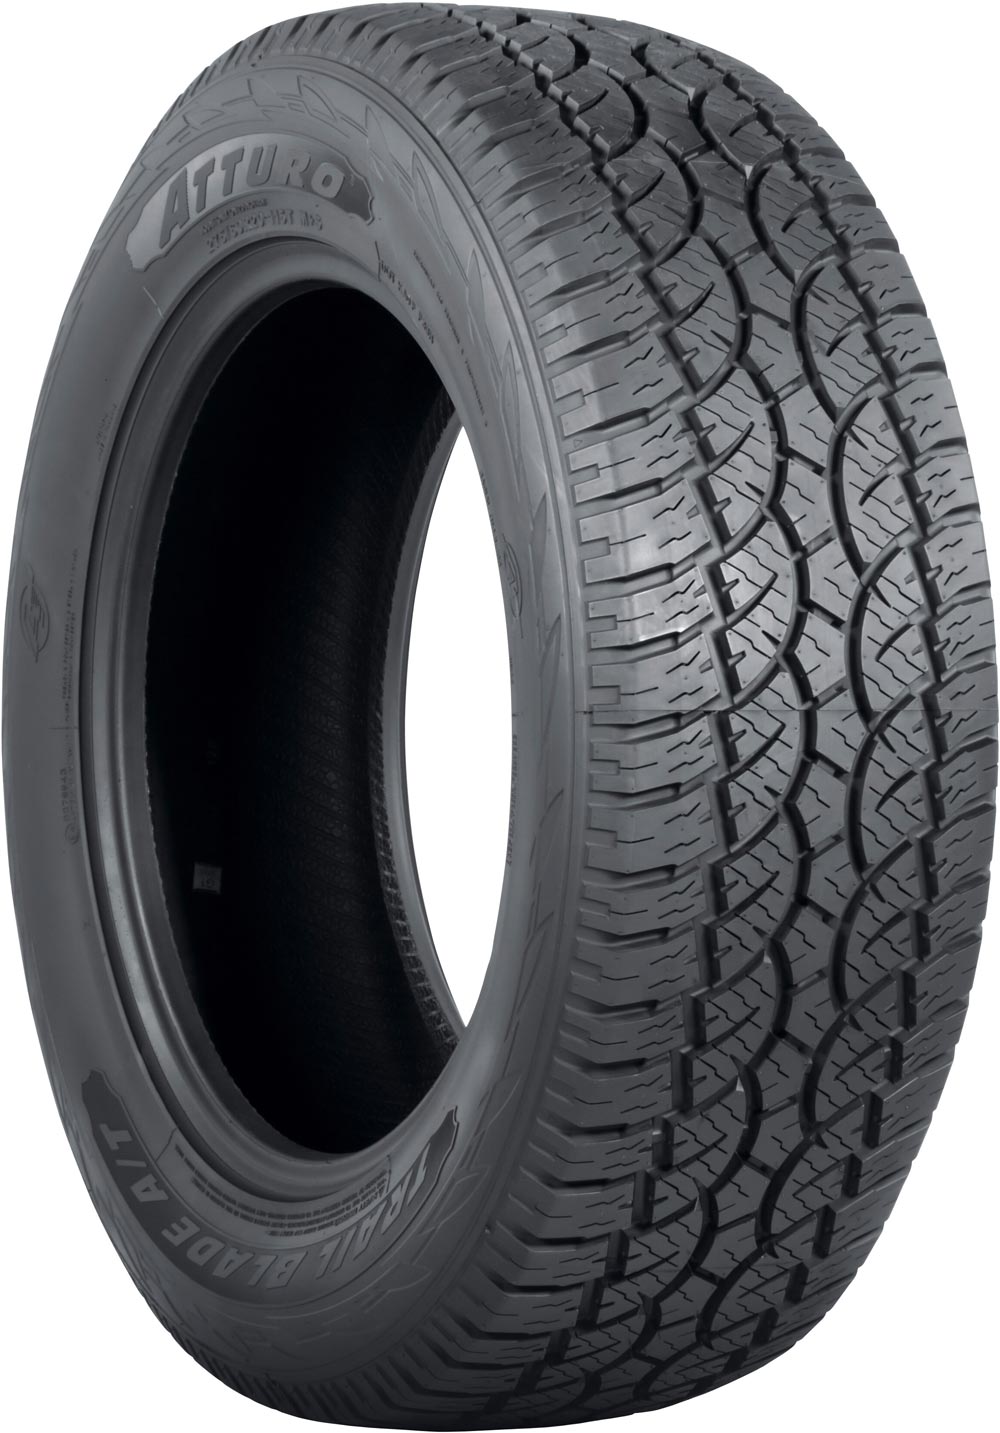 Автомобилни гуми Atturo TRAIL BLADE A/T 30/9.50 R15 104S